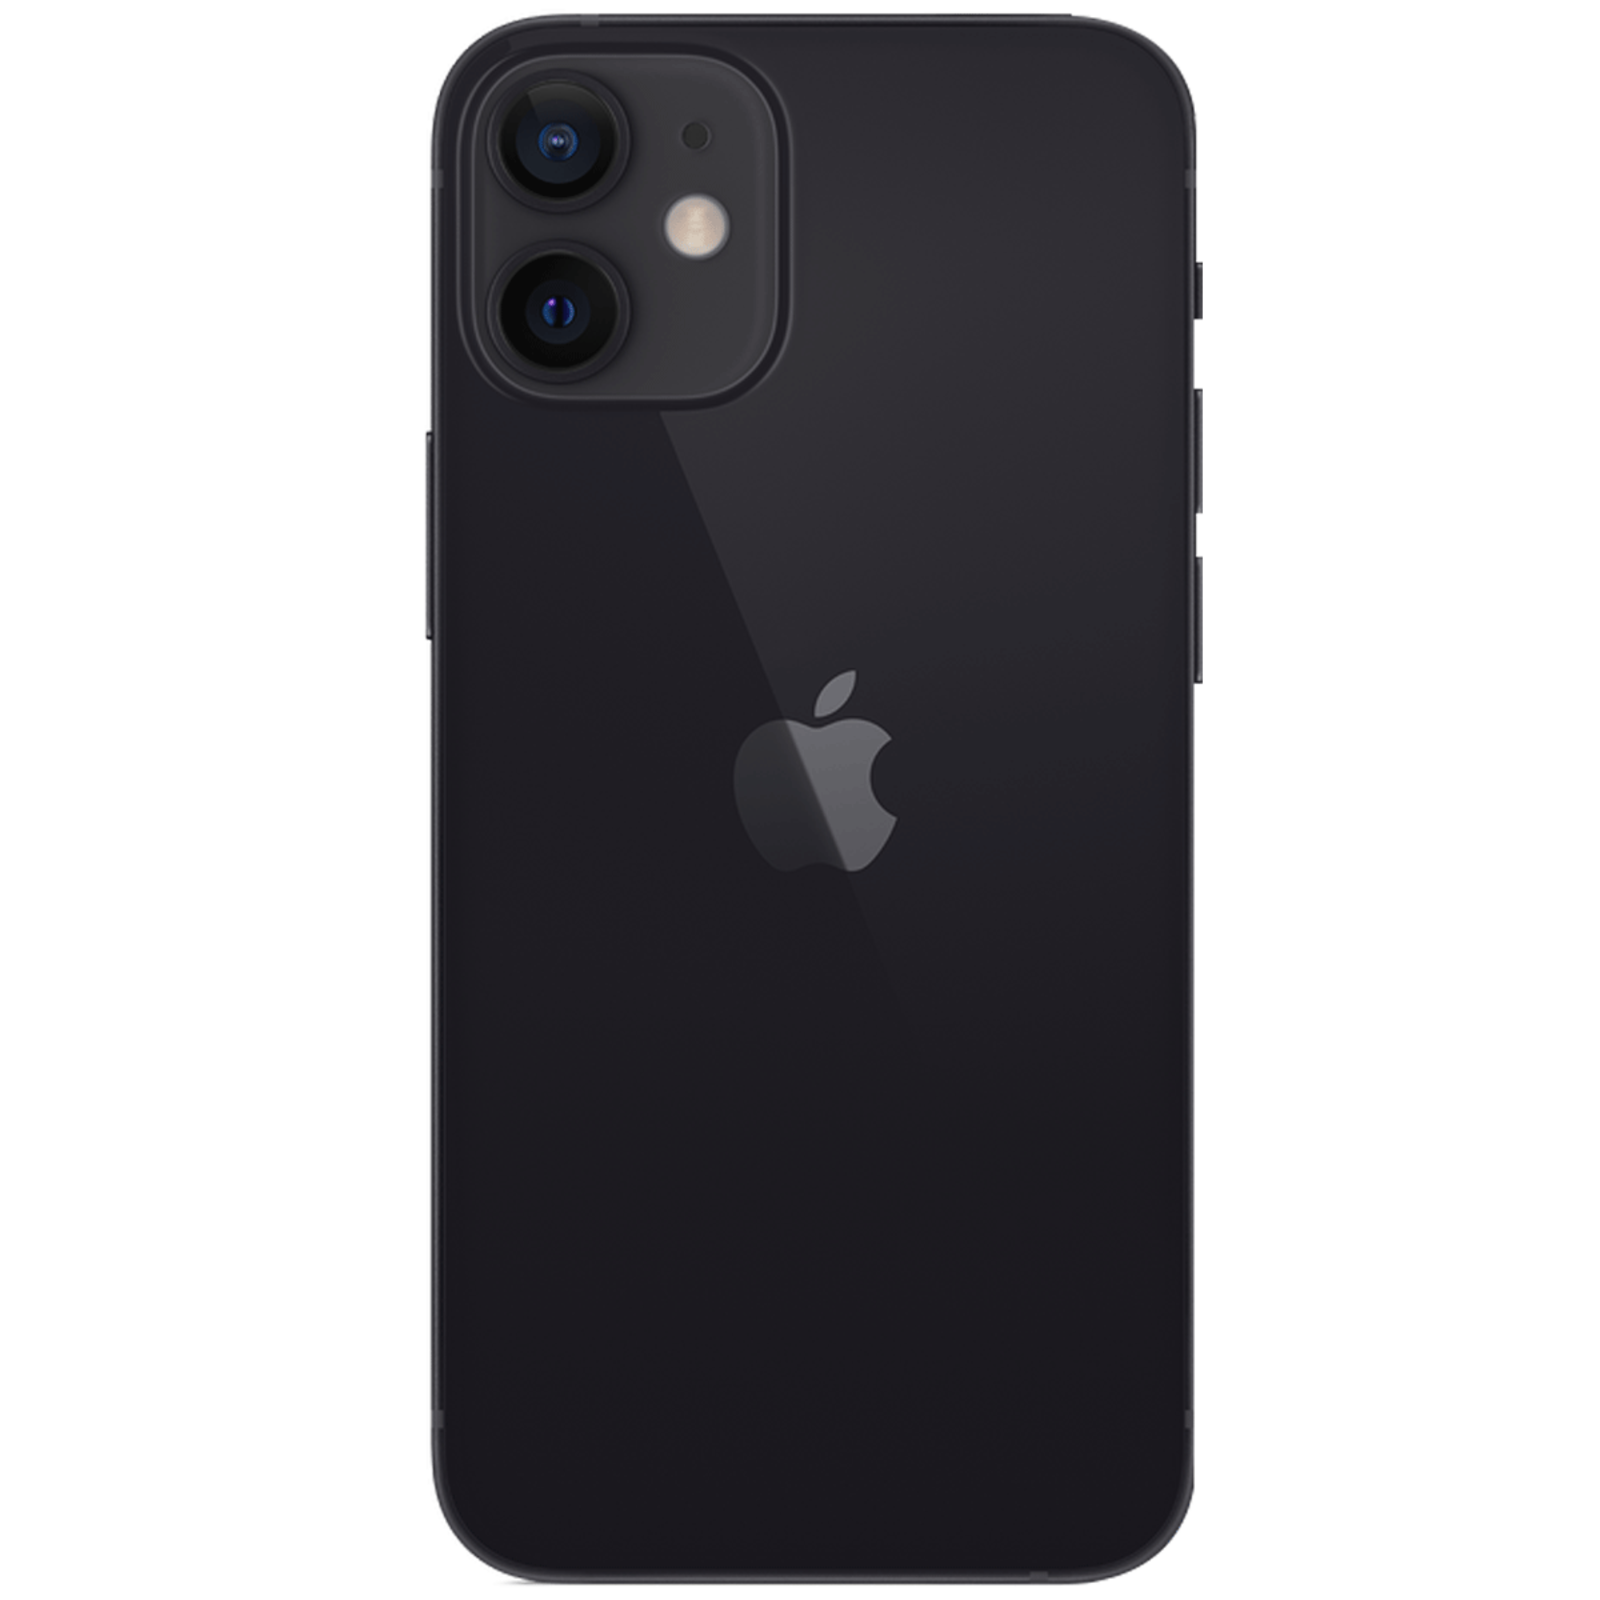 Apple iPhone 12 Mini (128GB, Black)